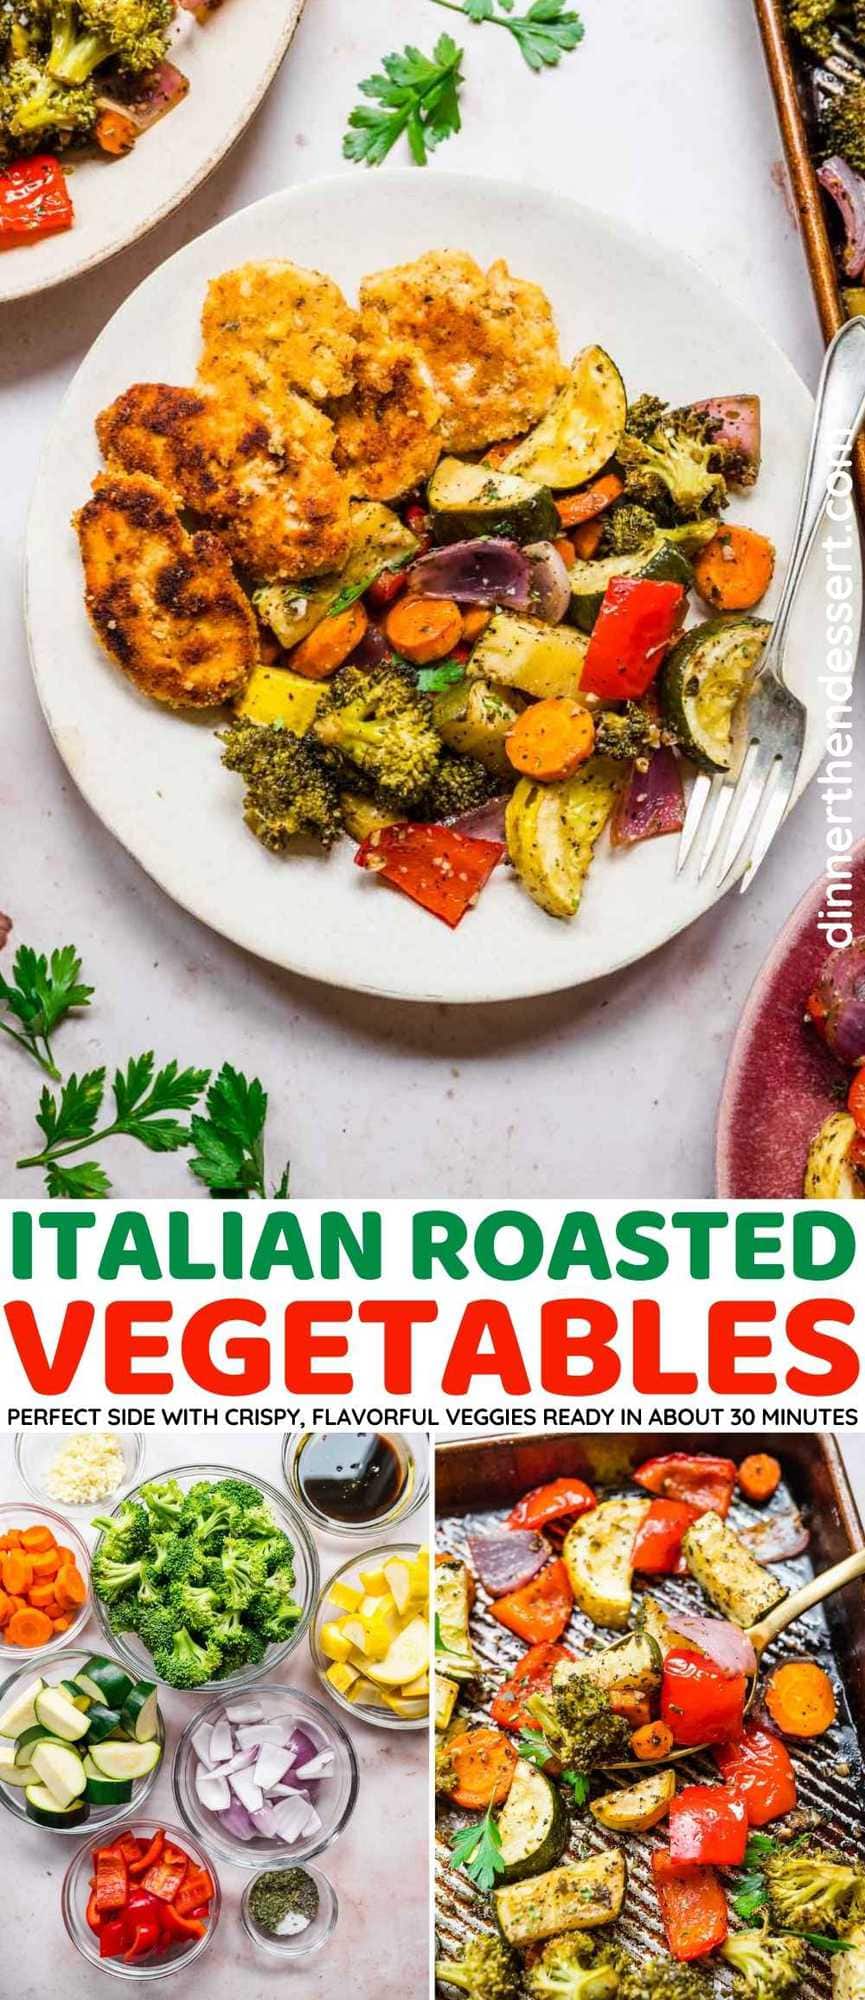 Italian Roasted Vegetables collage